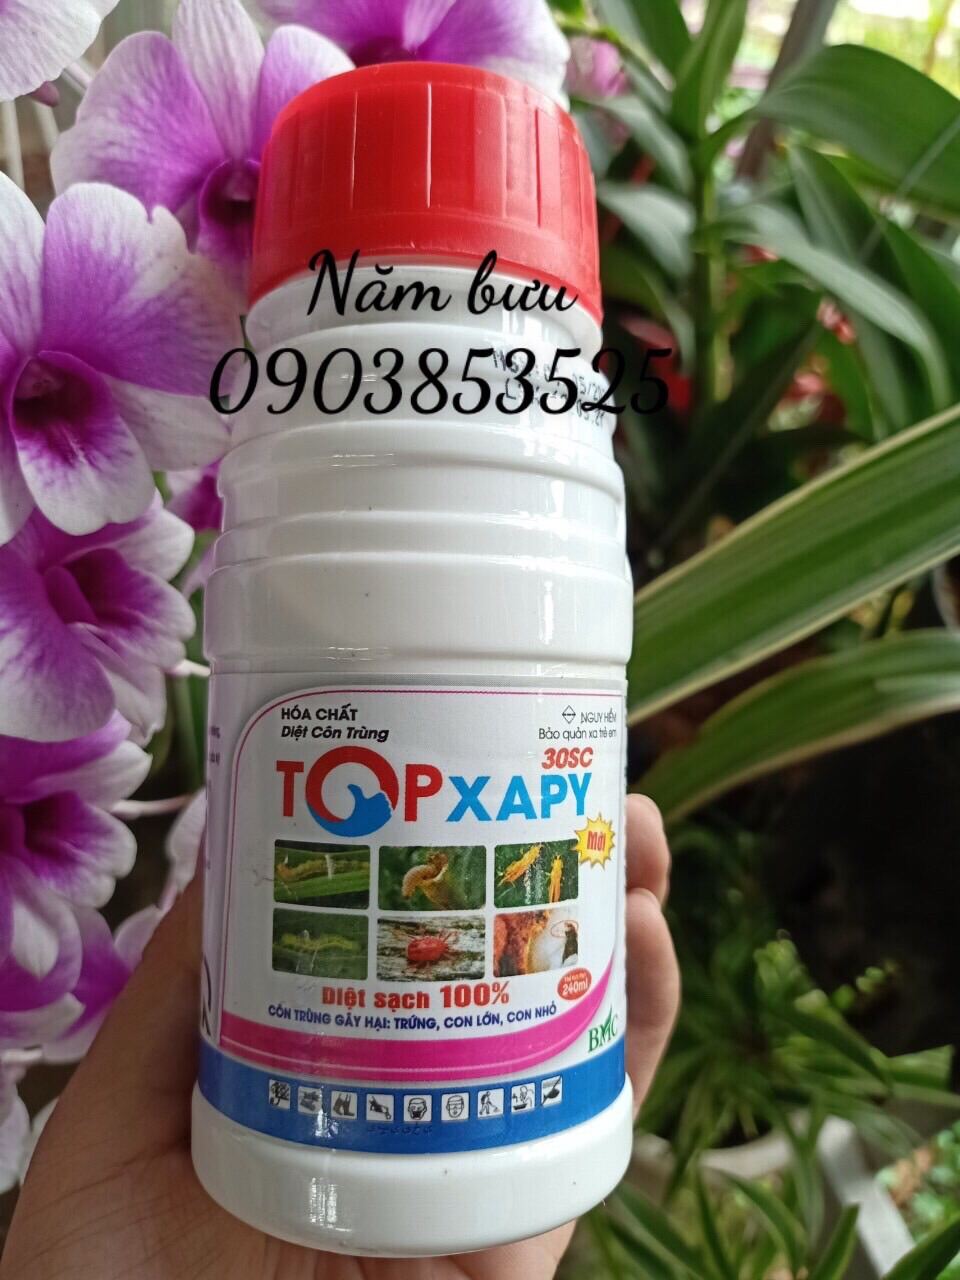 Topxapyr 30sc 240ml - chlorfenapyr+ pyriproxifen - ảnh sản phẩm 1